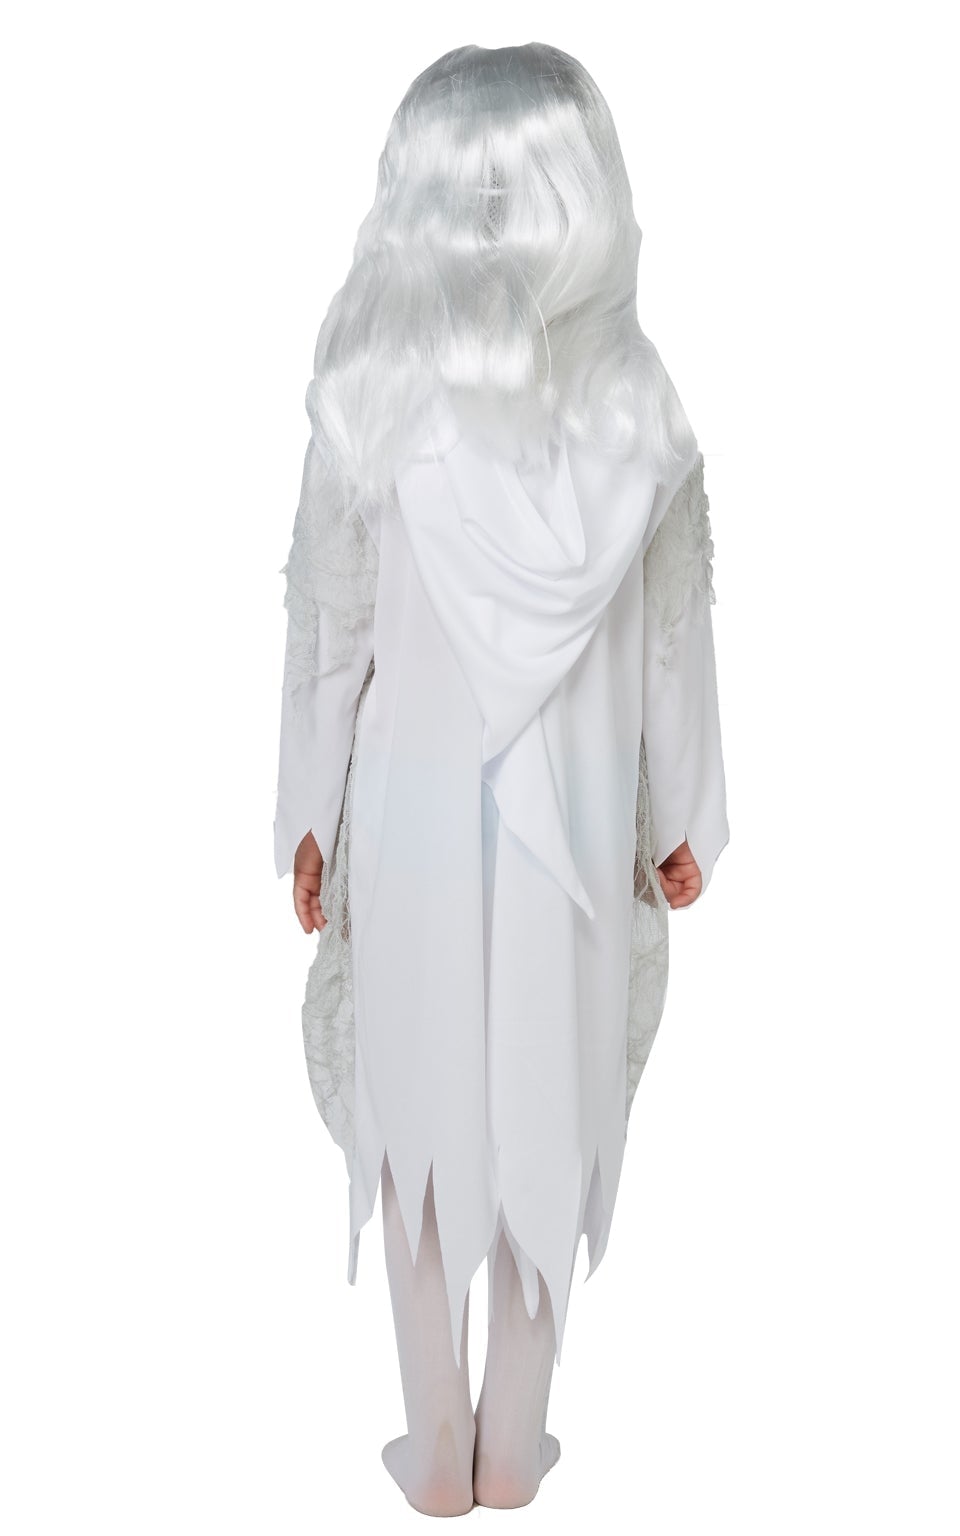 Girls Haunted Ghostly Spirit Costume_2 rub-630700M